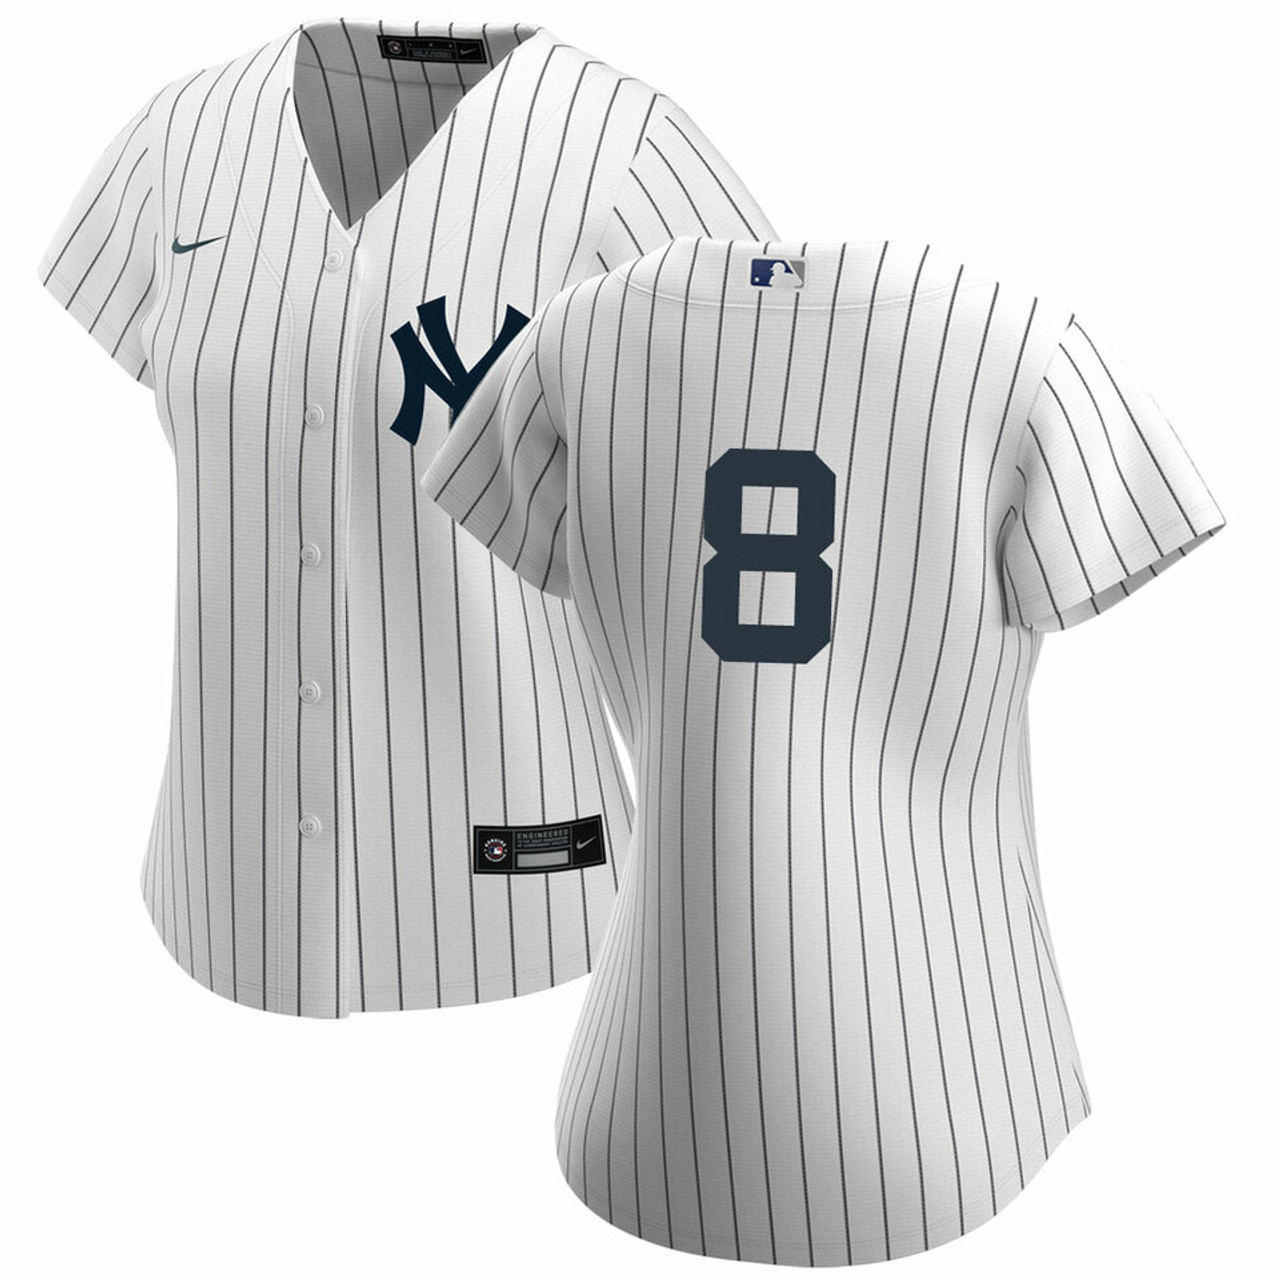 Yogi Berra Jersey - NY Yankees Replica Adult Home Jersey